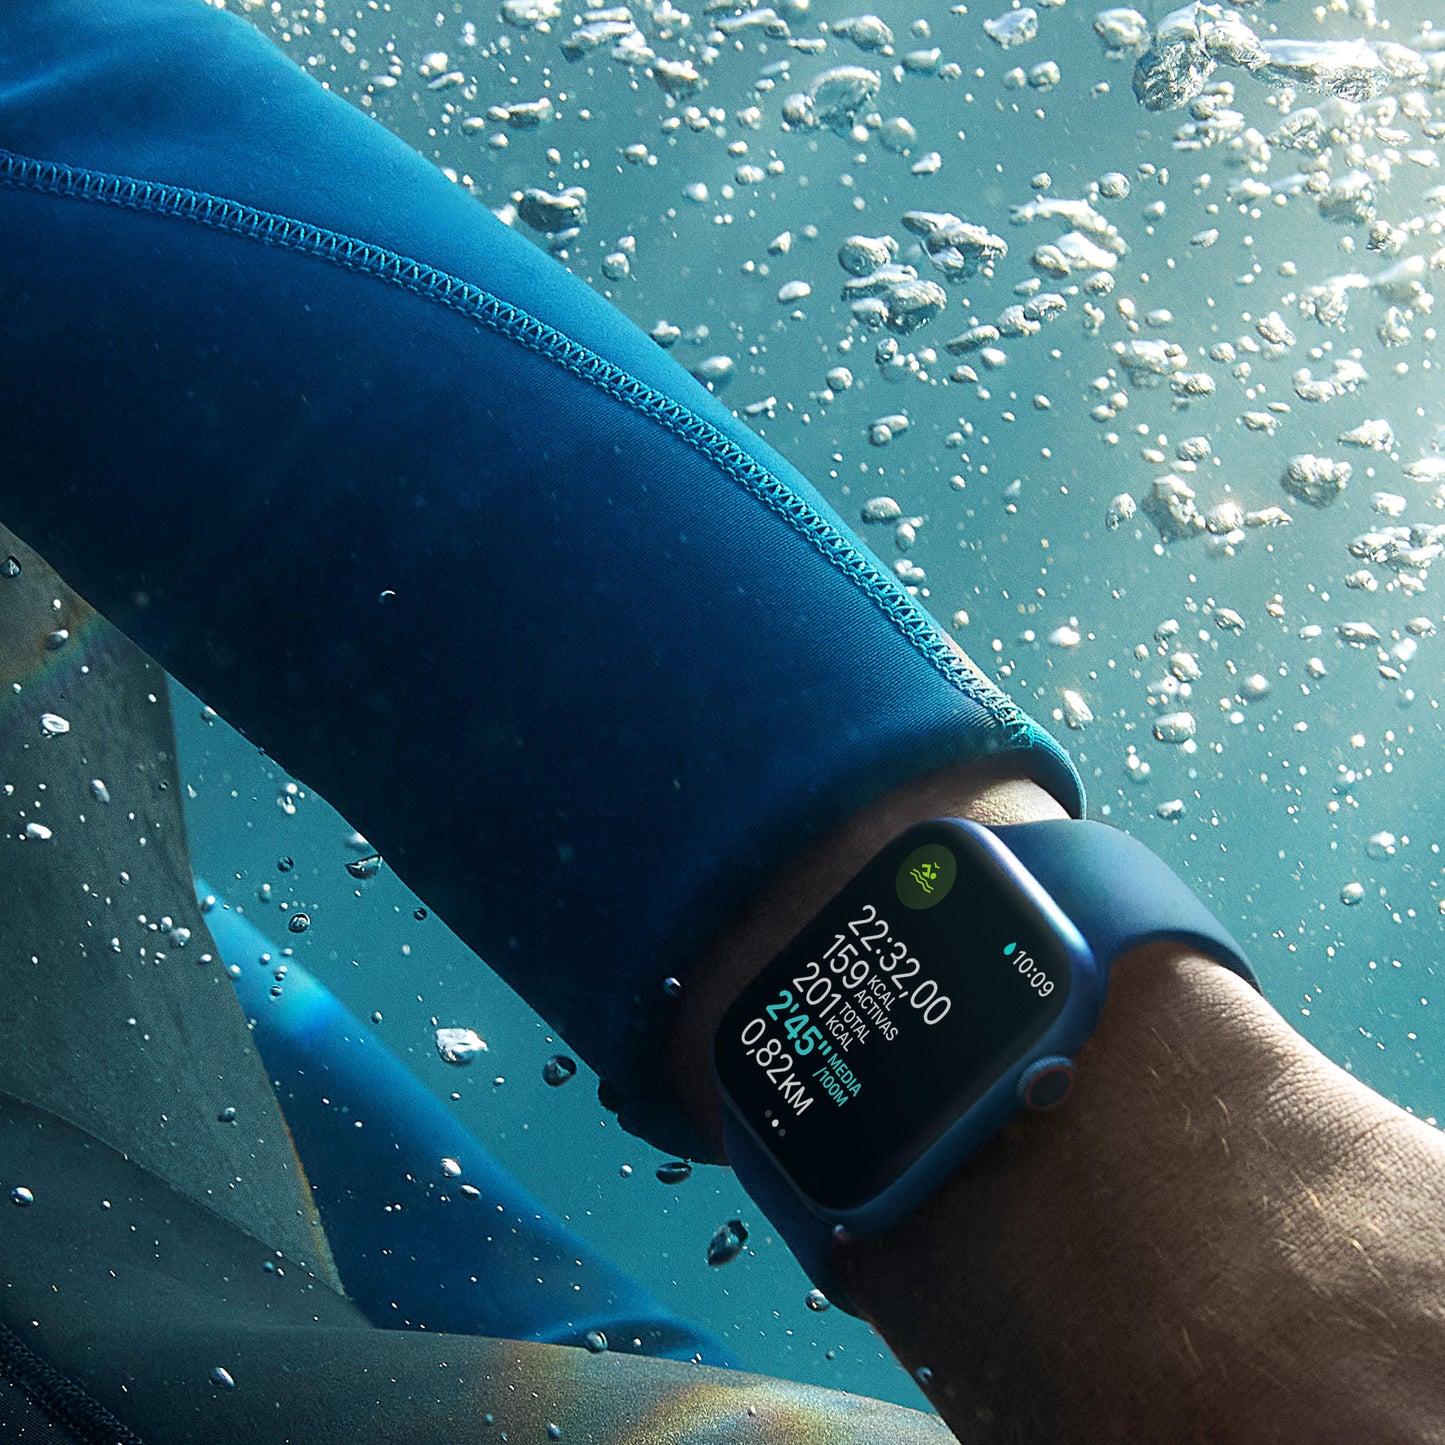 Apple Watch Series 7 (GPS + Cellular) - Caja de aluminio en azul de 45 mm - Correa deportiva en color abismo - Talla única - Rossellimac